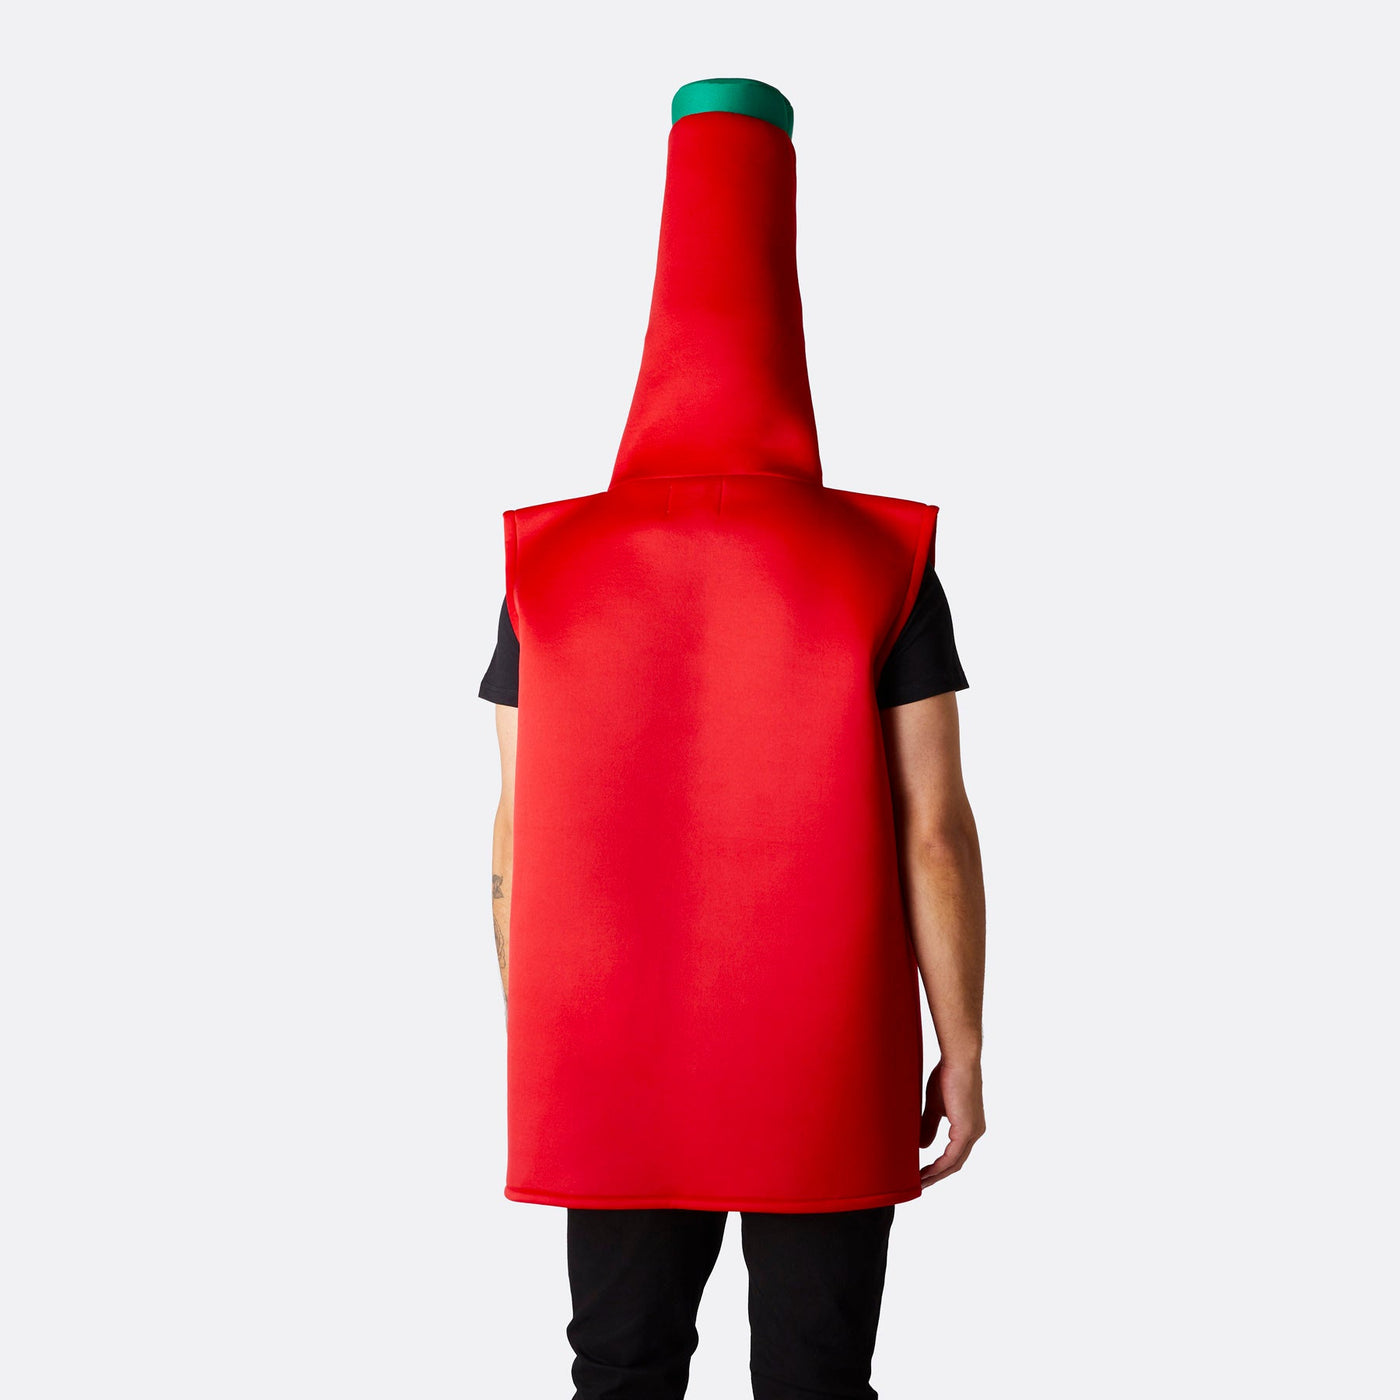 Hot Sauce Bottle Costume